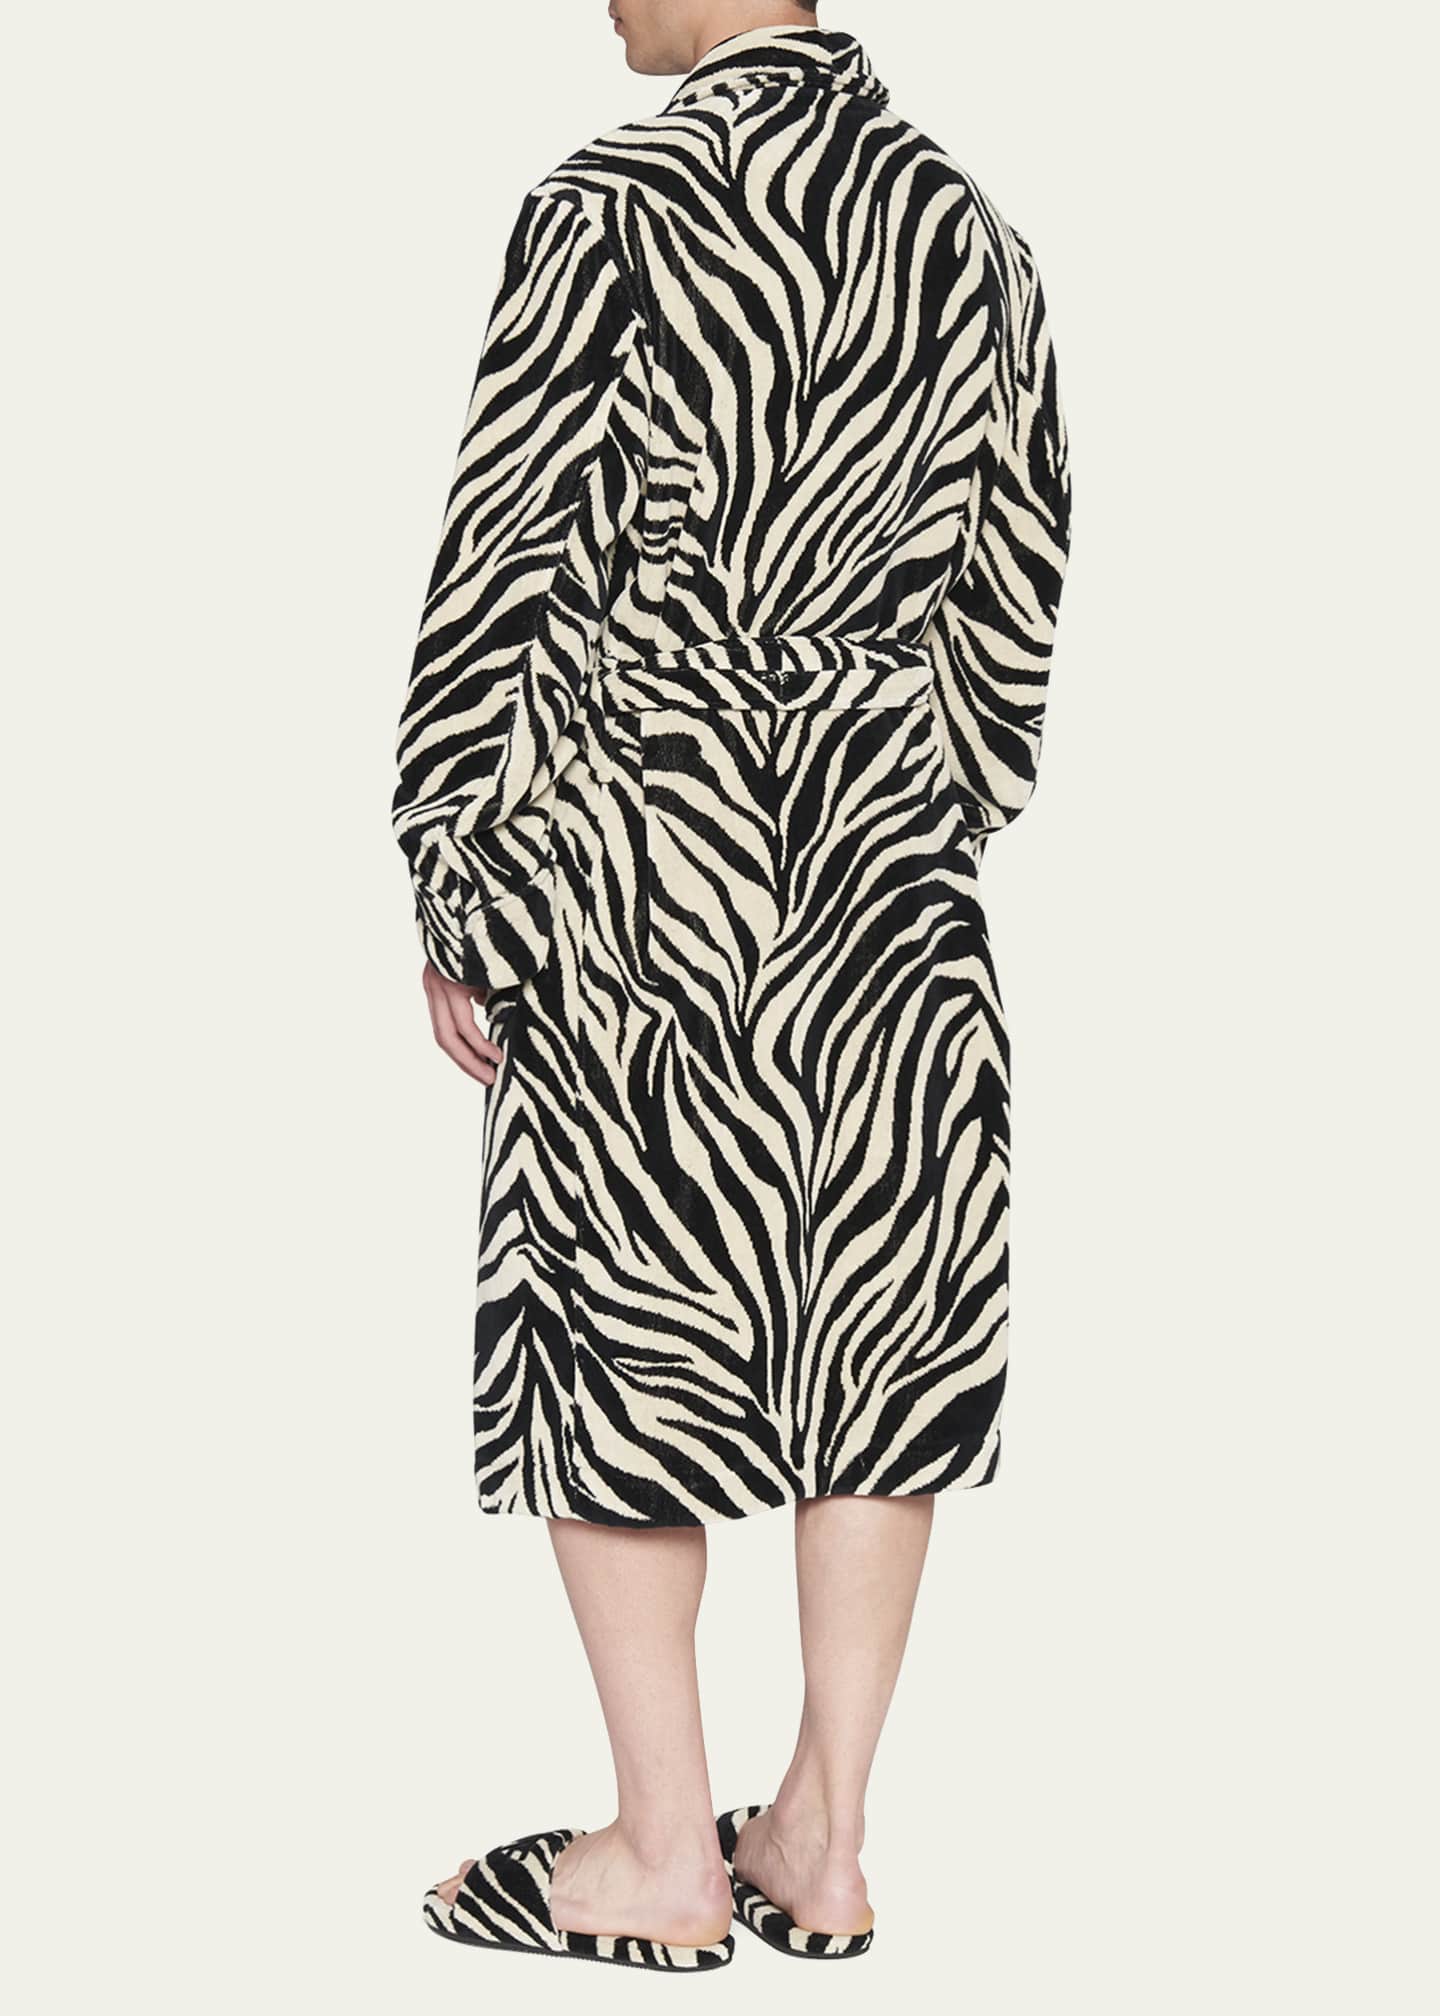 TOM FORD Men's Cotton Zebra-Print Robe - Bergdorf Goodman